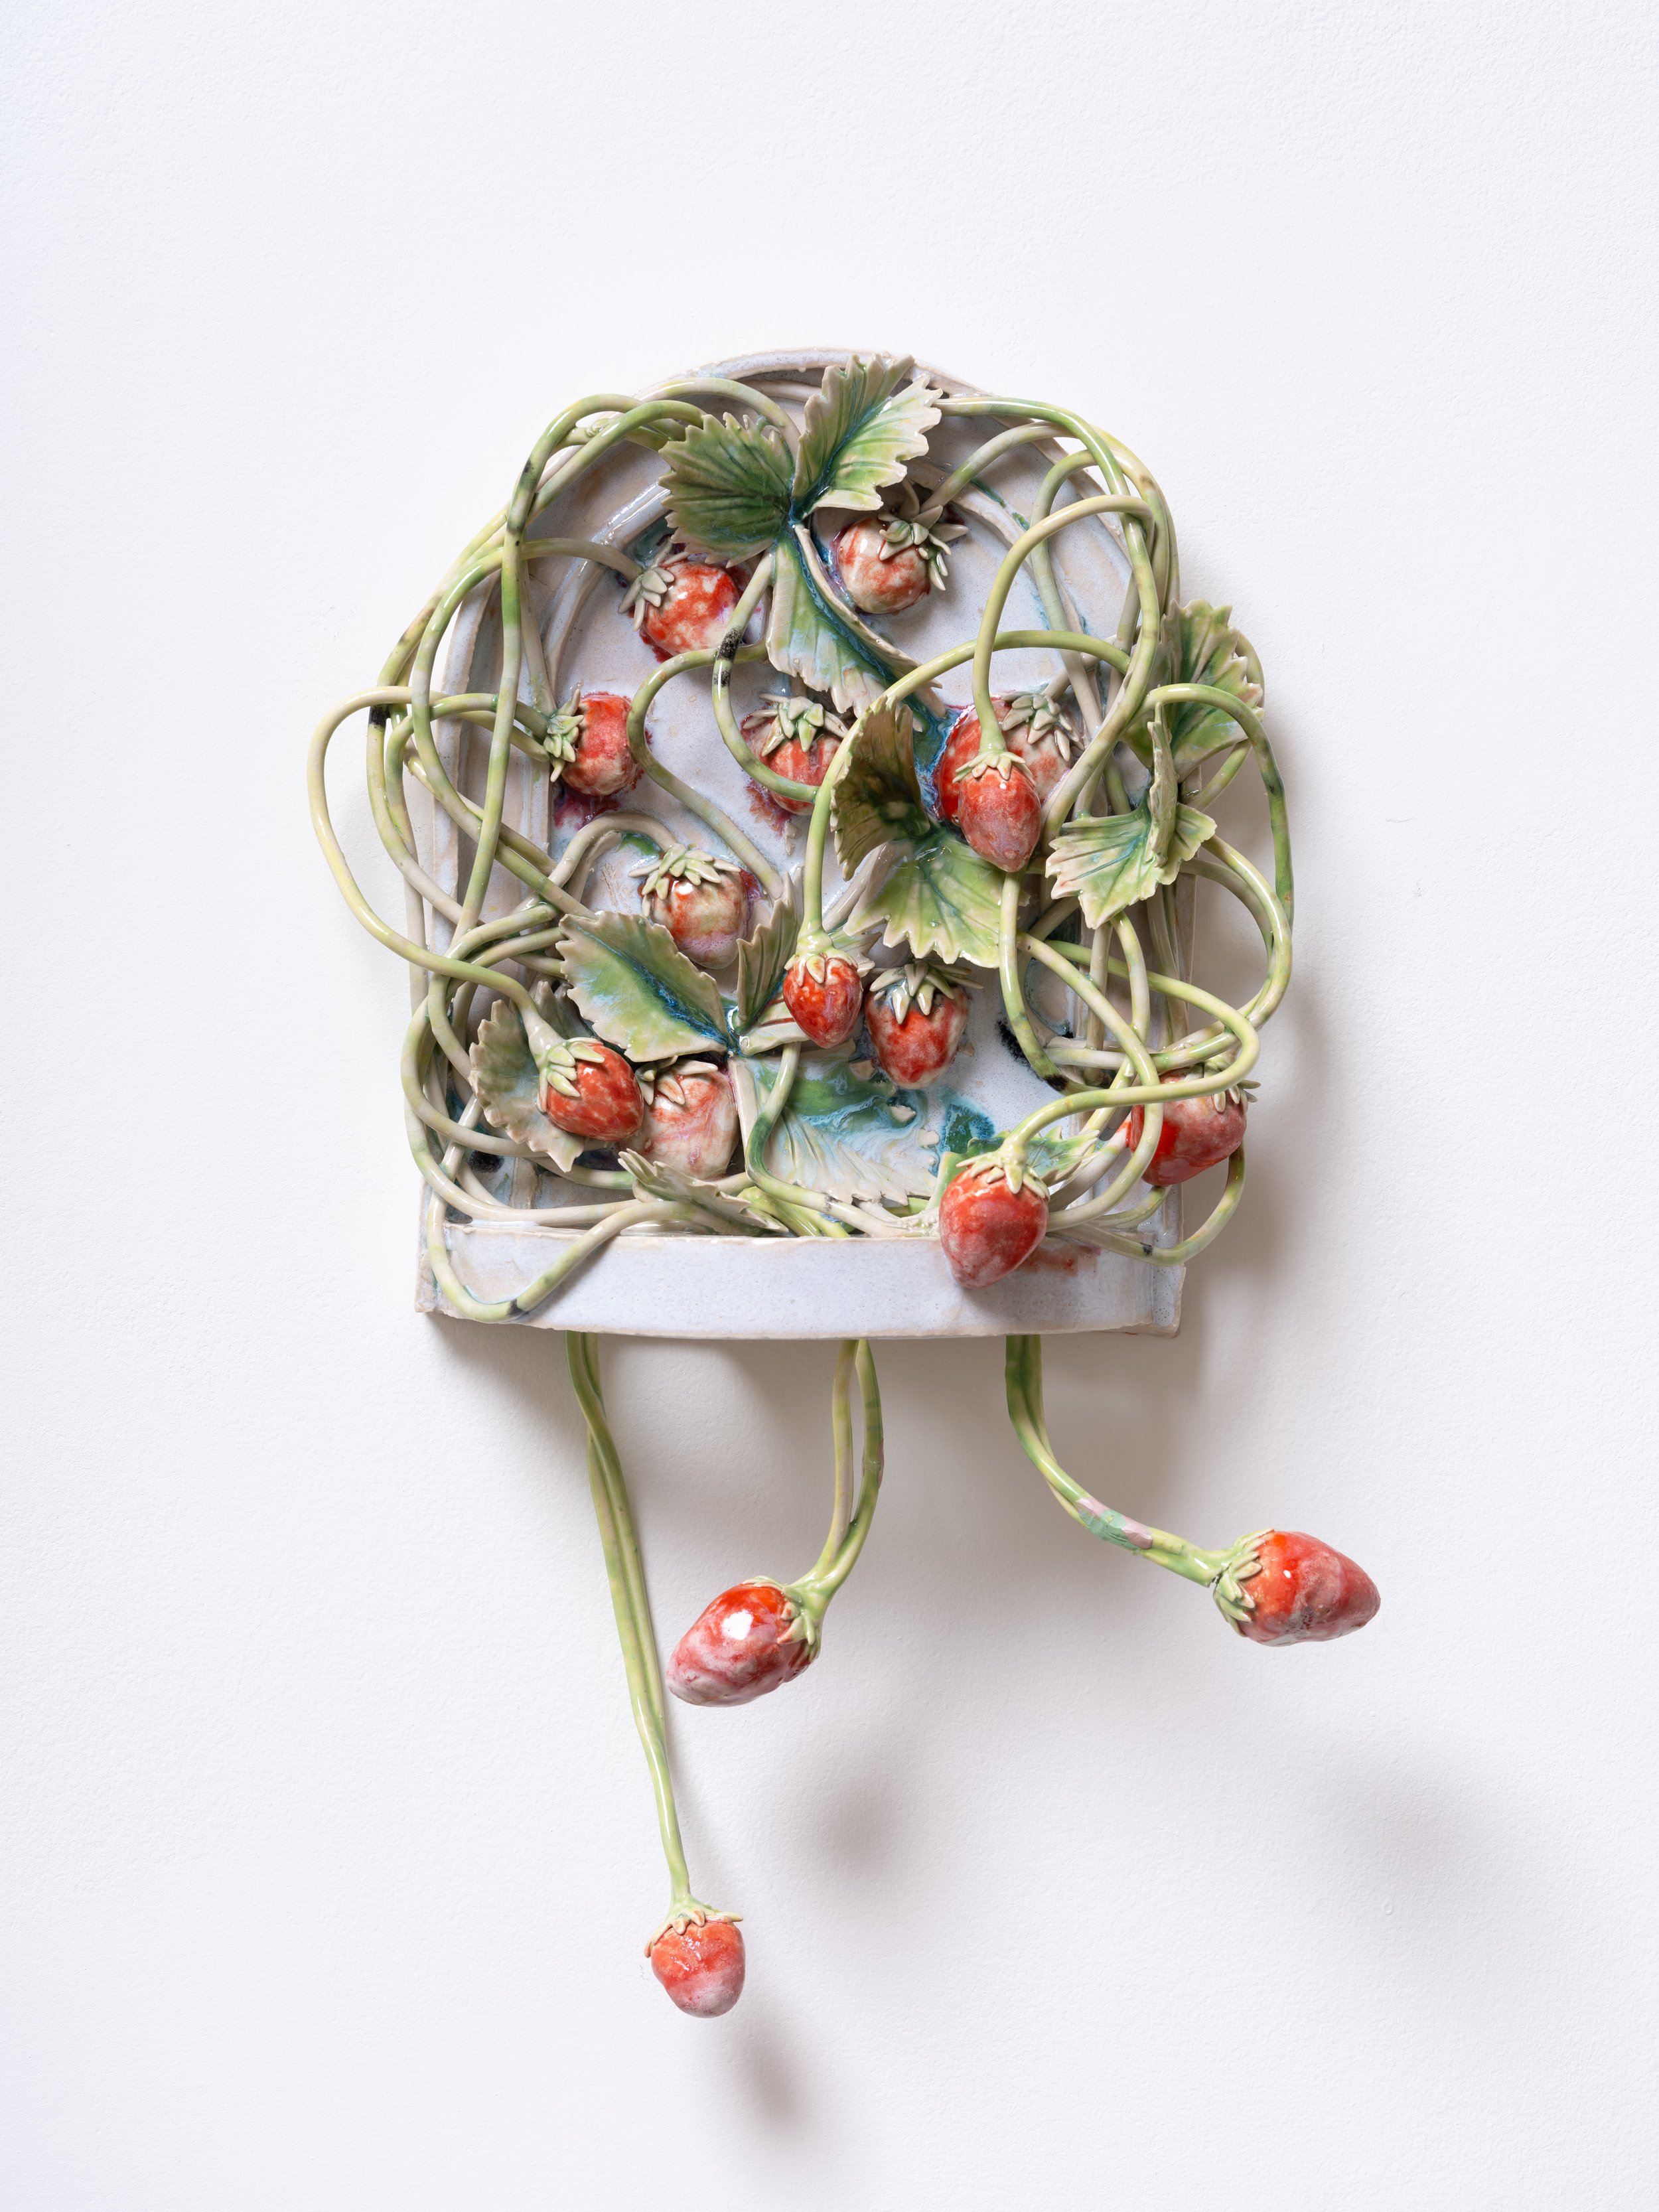   Bush of Strawberries , 2022  Glazed porcelain  18 x 12 x 6 inches (45.7 x 30.5 x 15.2 cm)&nbsp; 